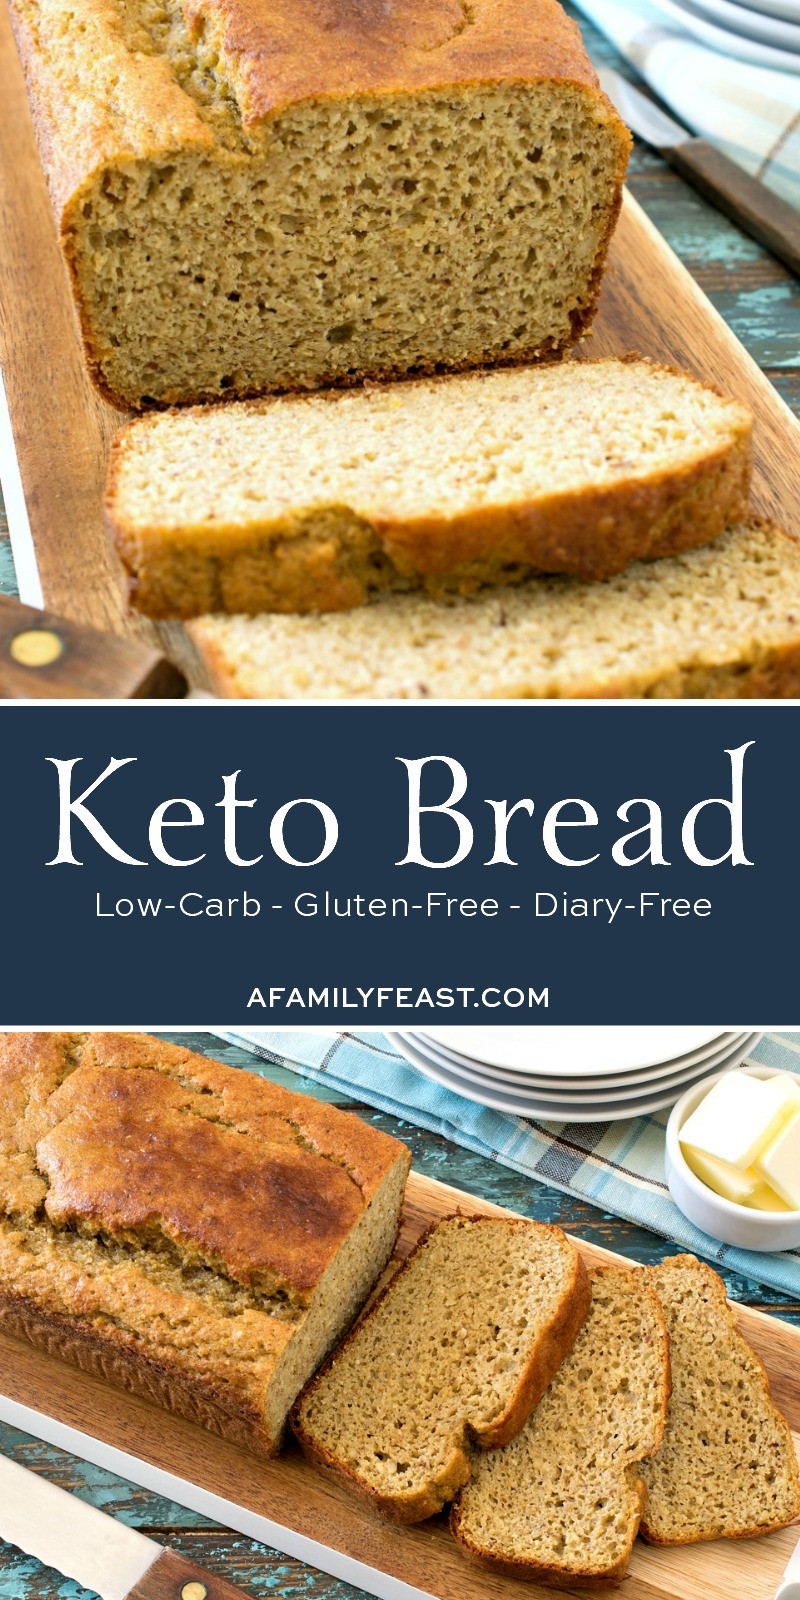 Low Carb Keto Bread Recipes
 Keto Bread A Family Feast